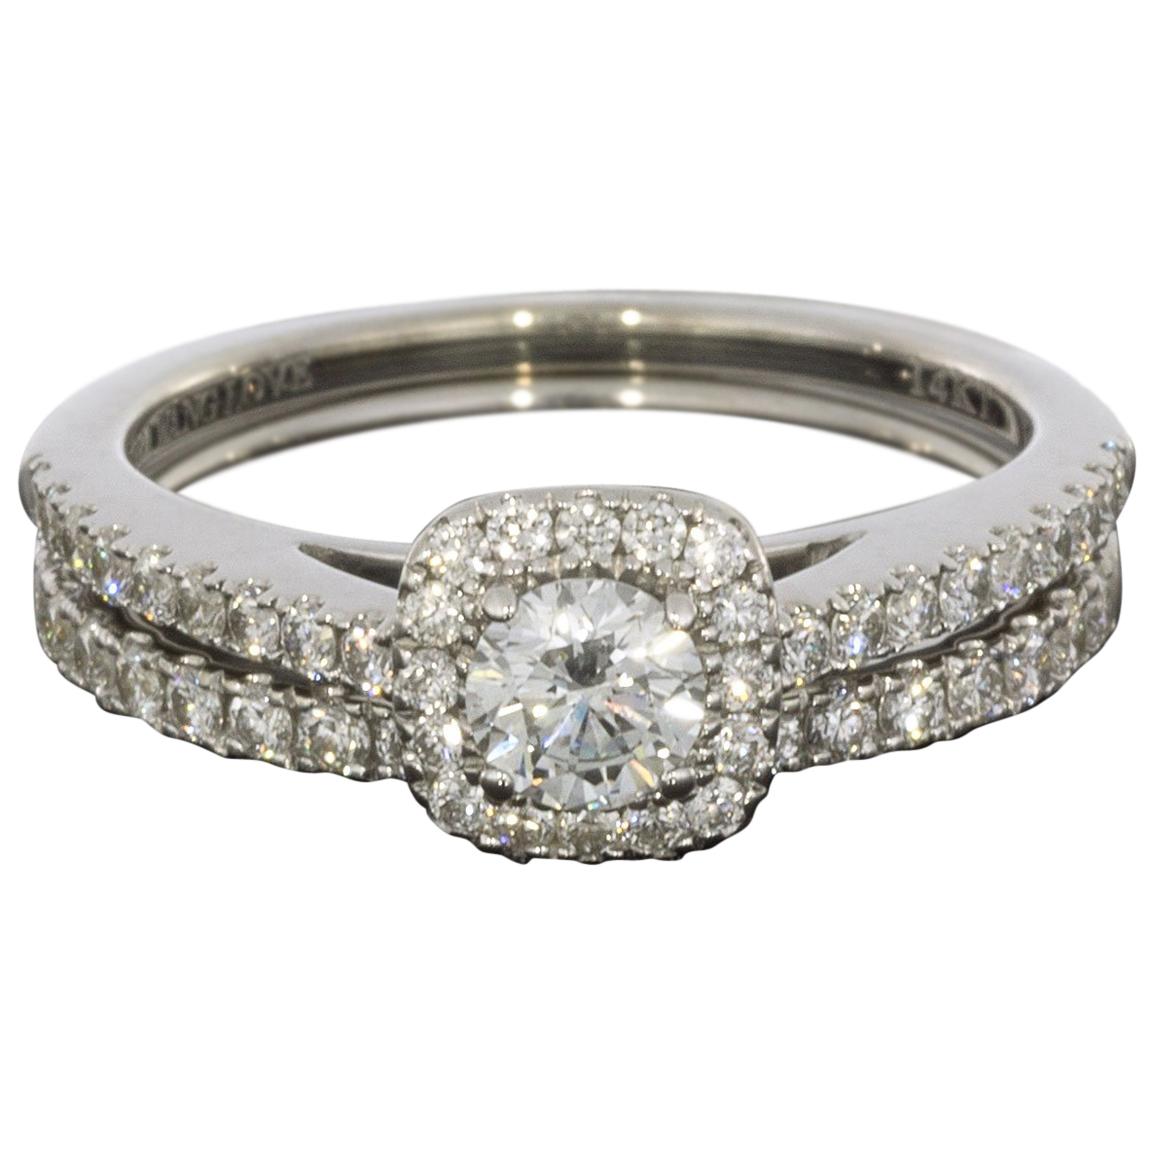 Vera Wang Love White Gold Round Diamond Halo Engagement Ring and Band Set